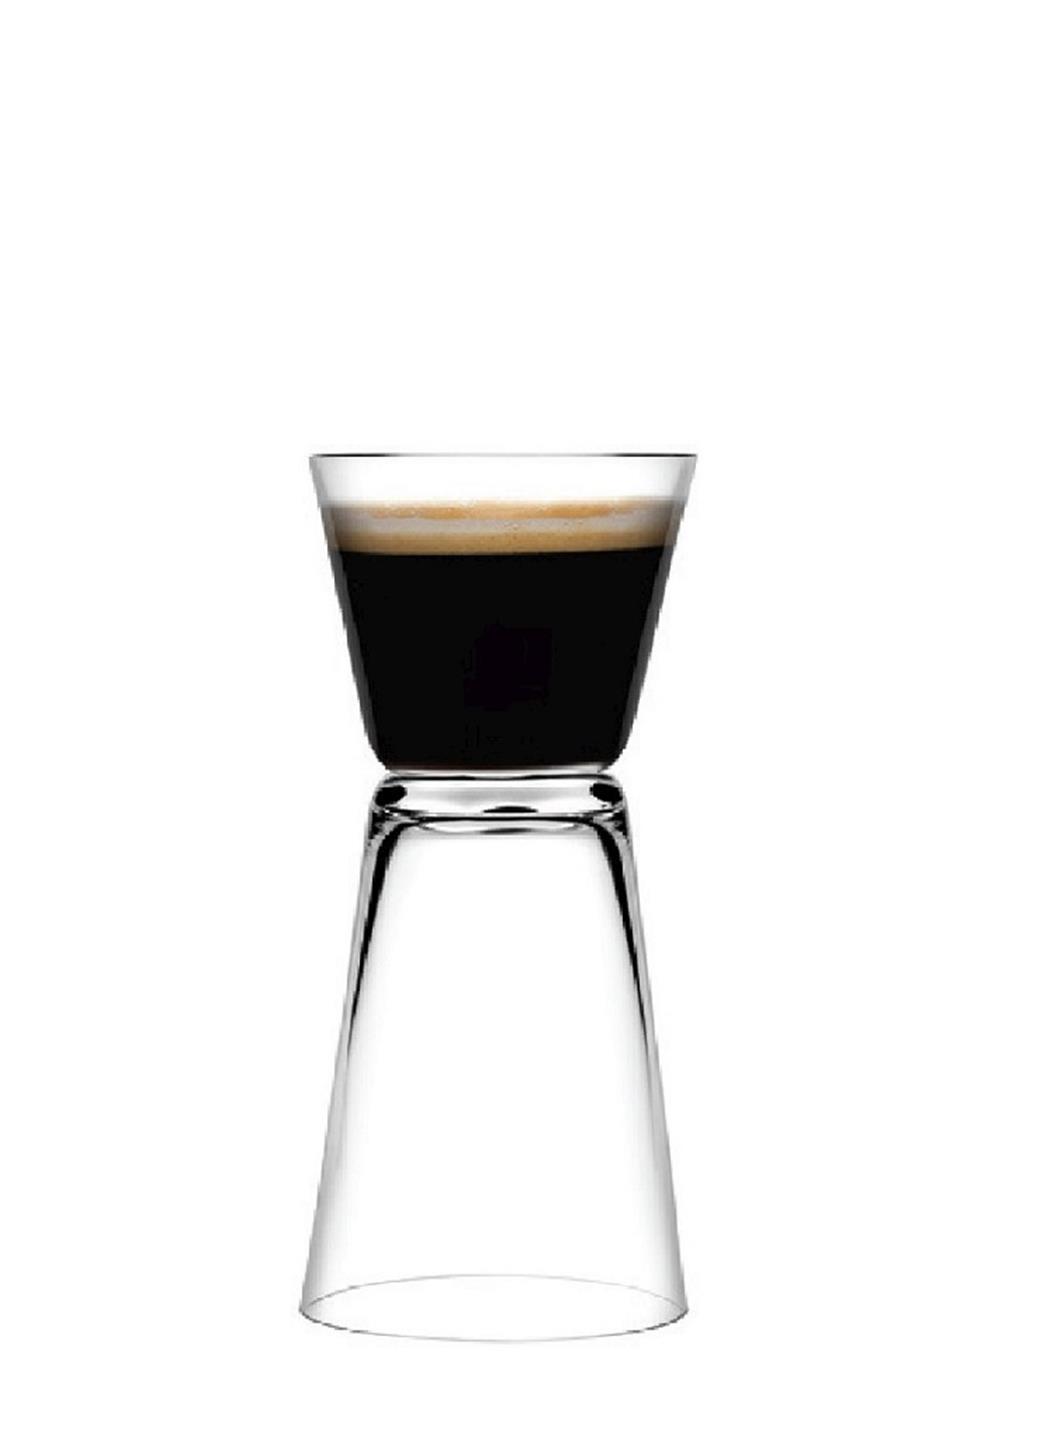 NUDE DUAL COFFEE SET2 55-100CC D:5.5 H:12.1 GB2.OB12.